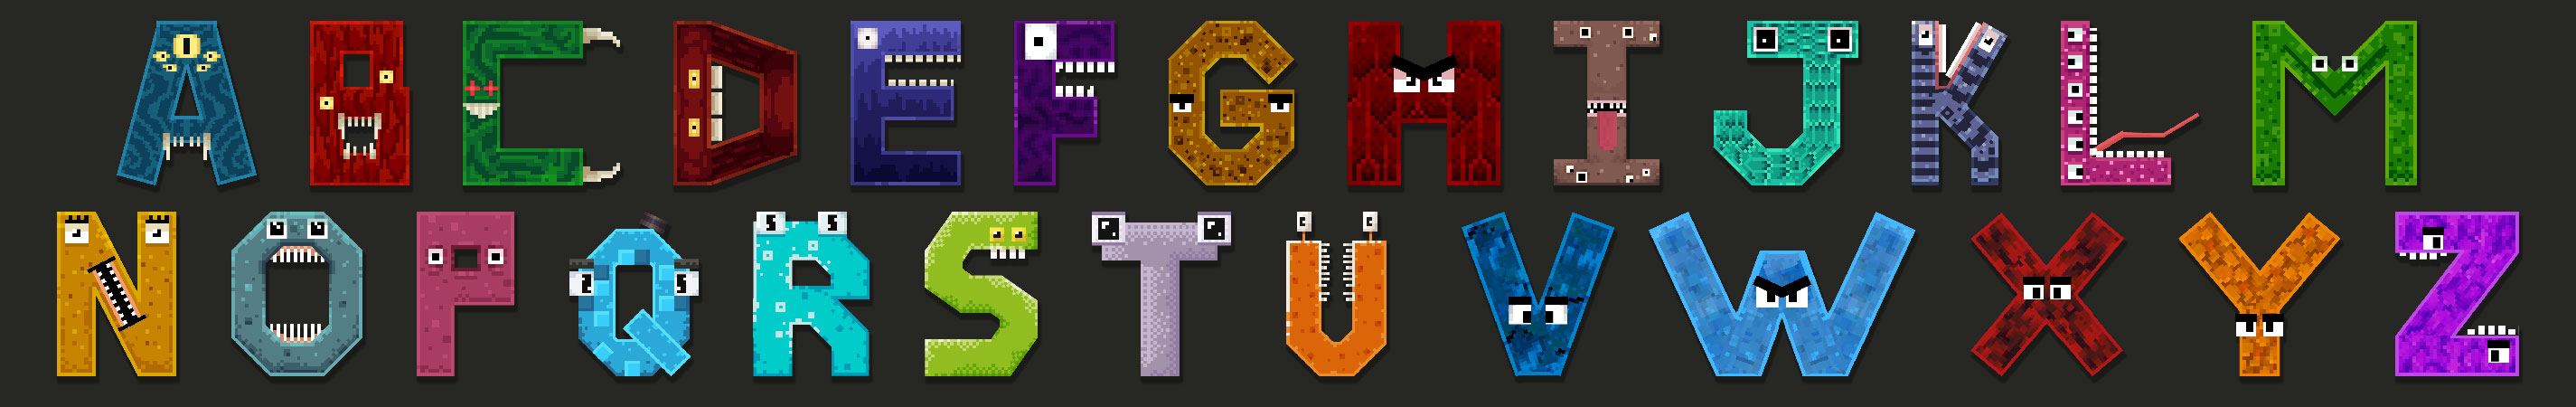 The Alphabet in Minecraft Marketplace